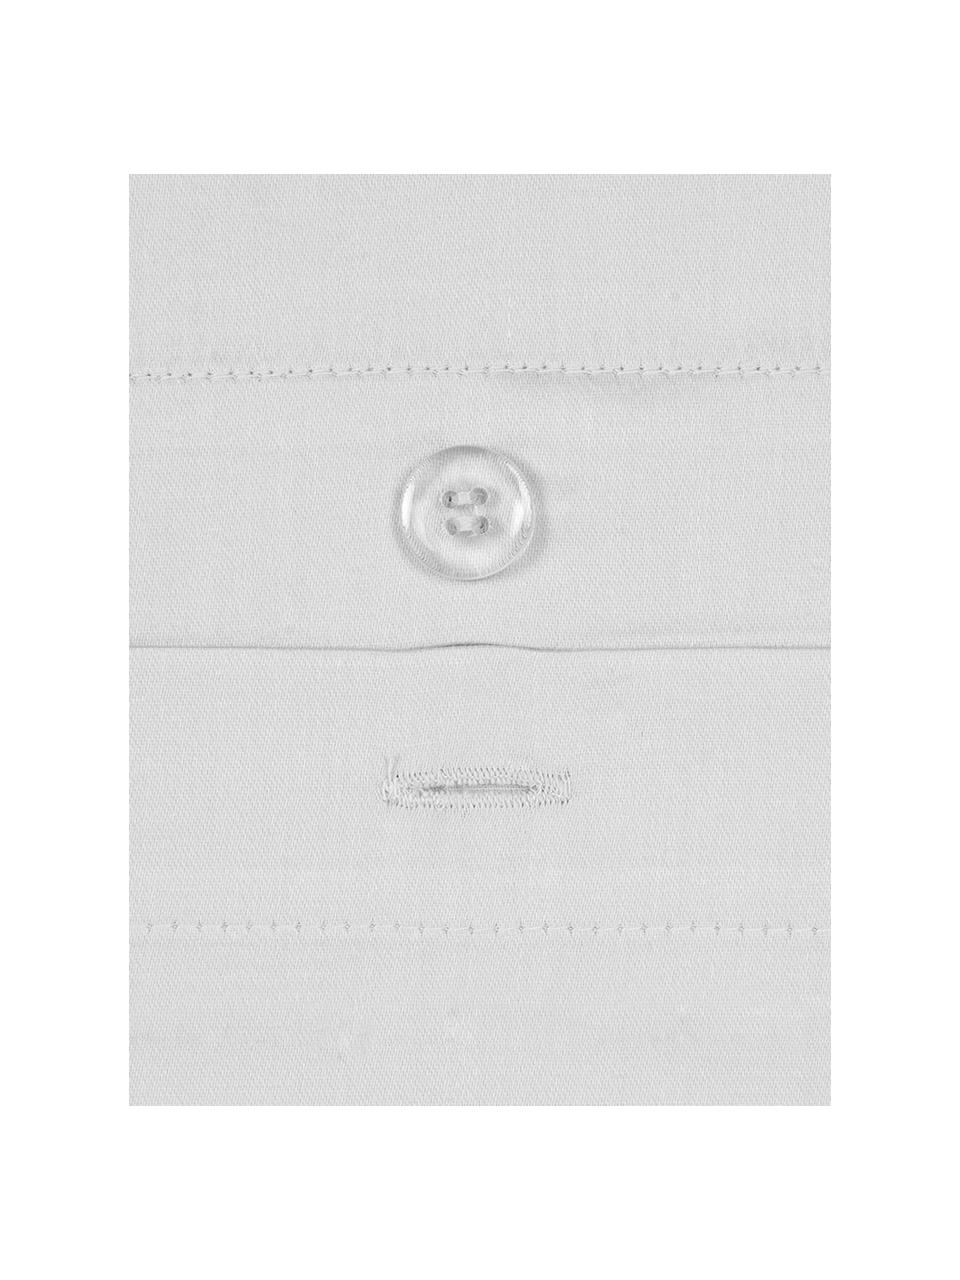 Baumwollsatin-Kissenbezug Premium in Hellgrau mit Stehsaum, 65 x 100 cm, Webart: Satin, leicht glänzend Fa, Hellgrau, B 65 x L 100 cm